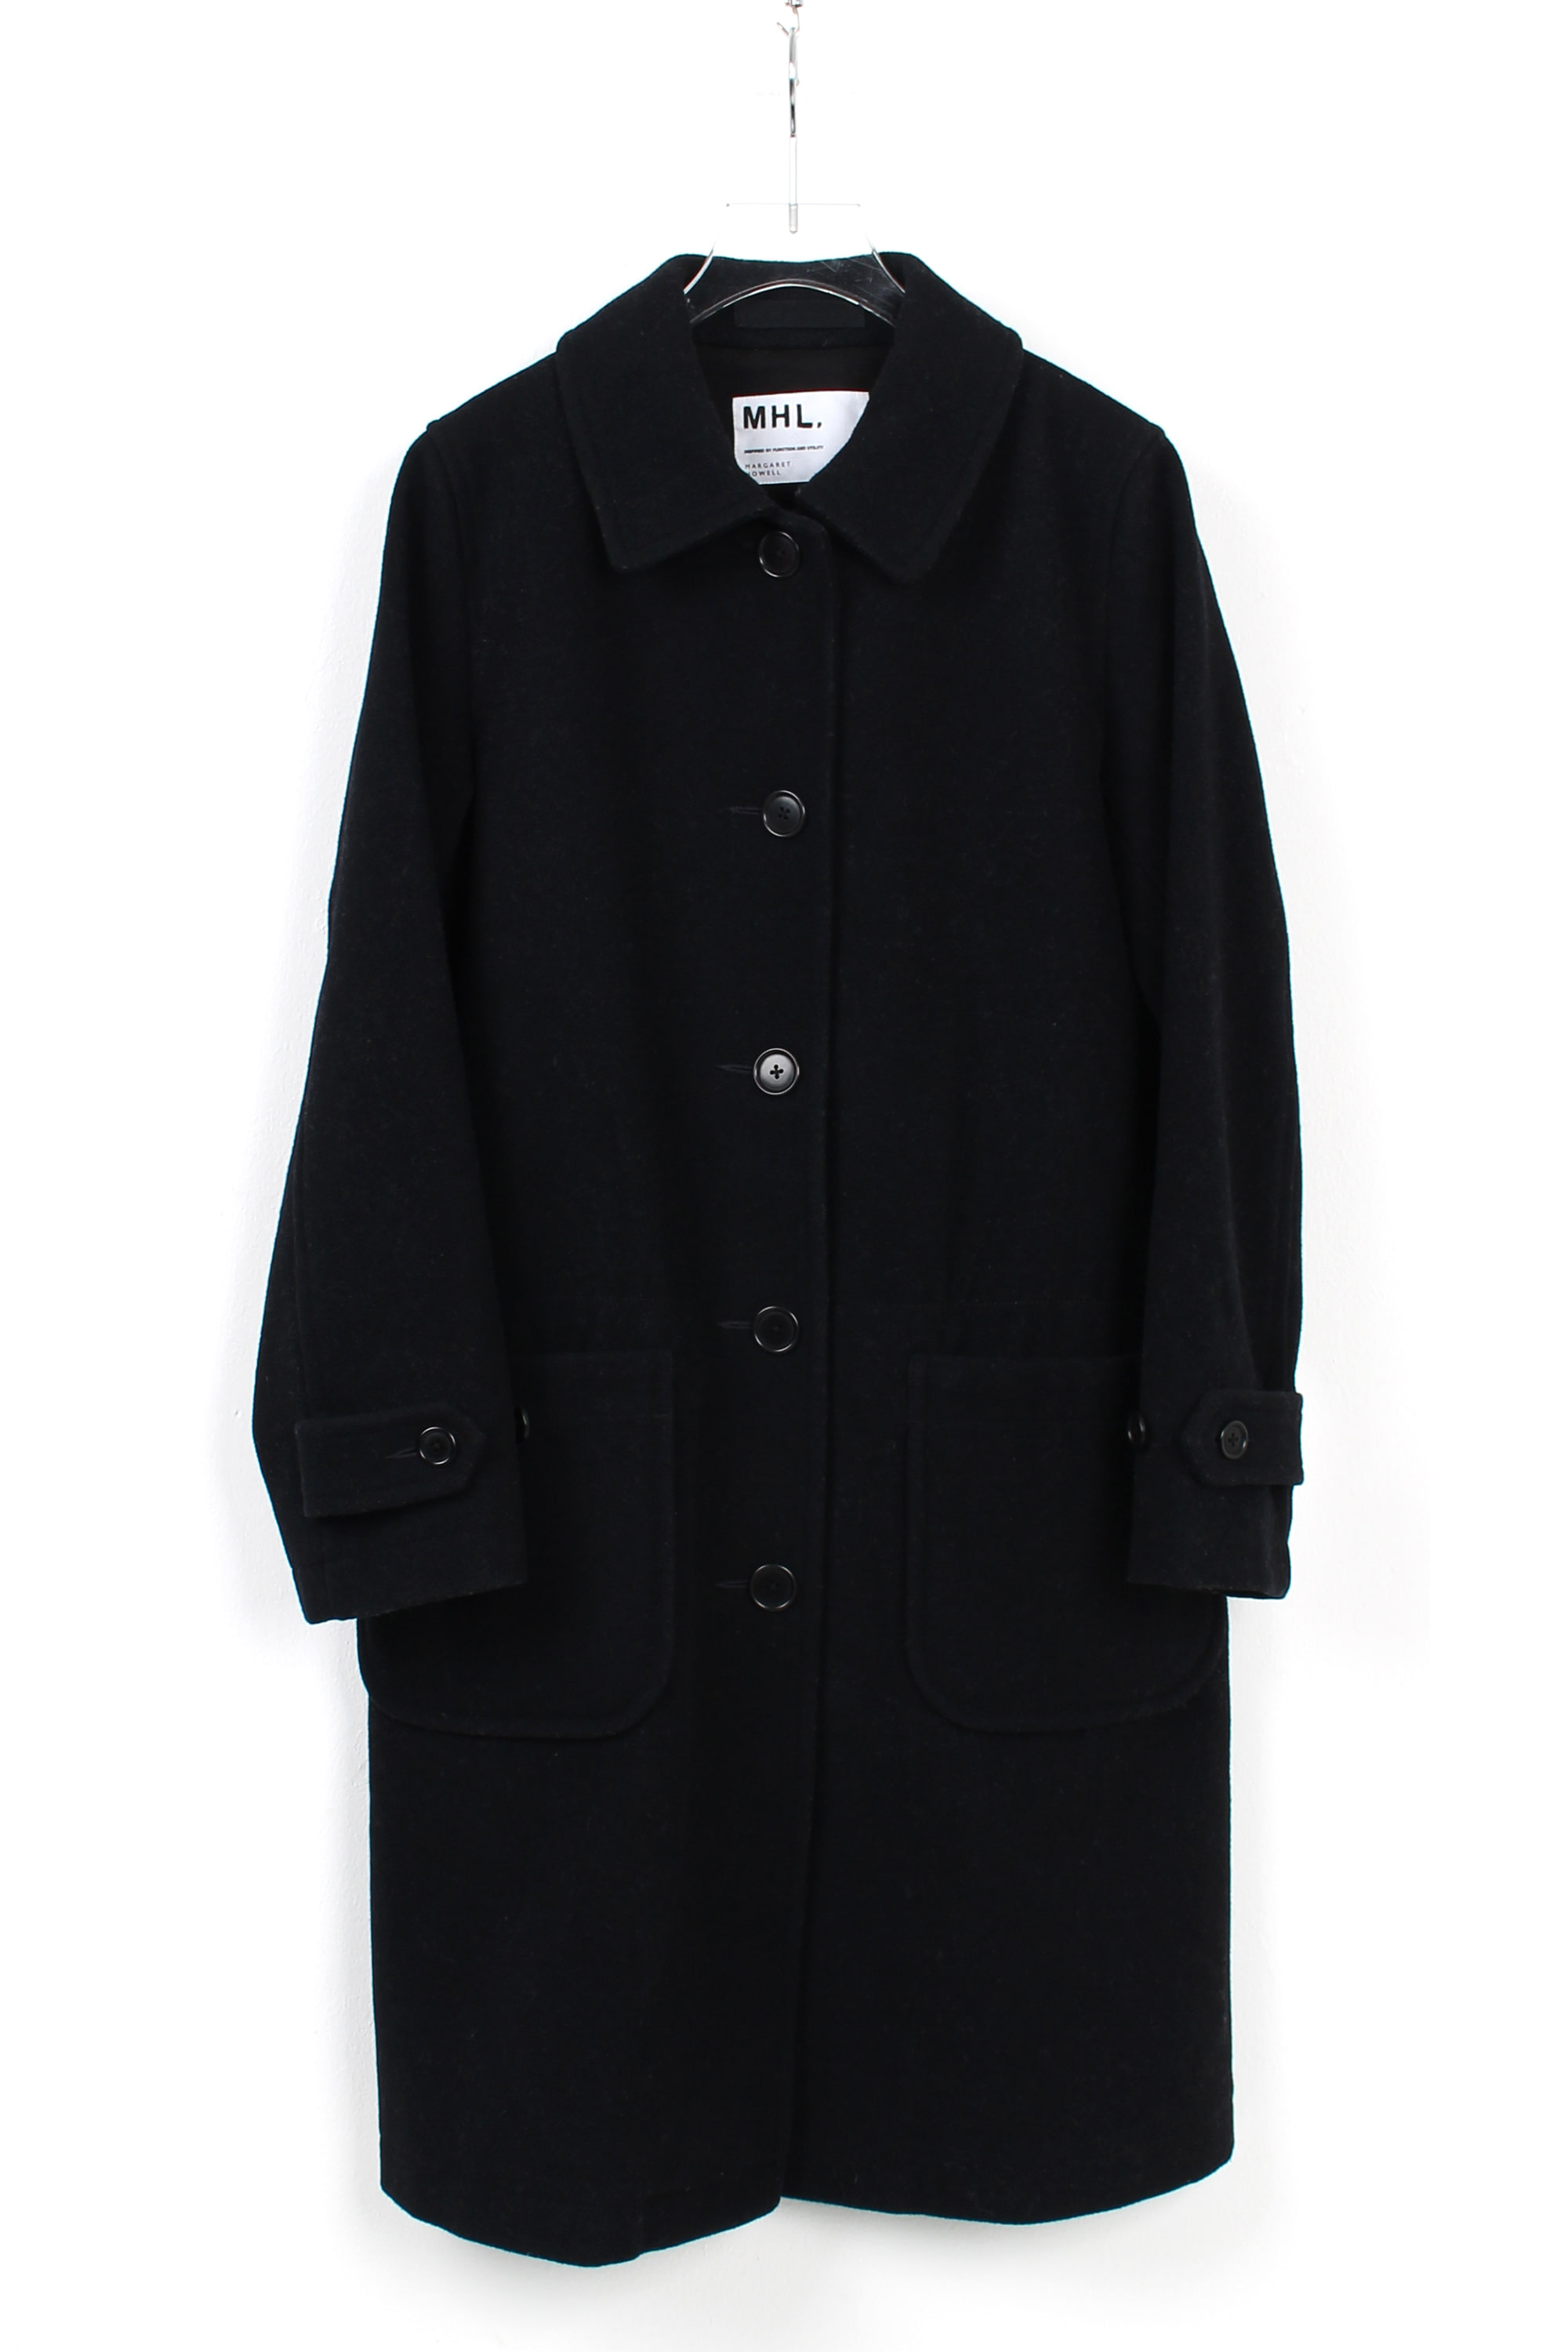 MHL single coat